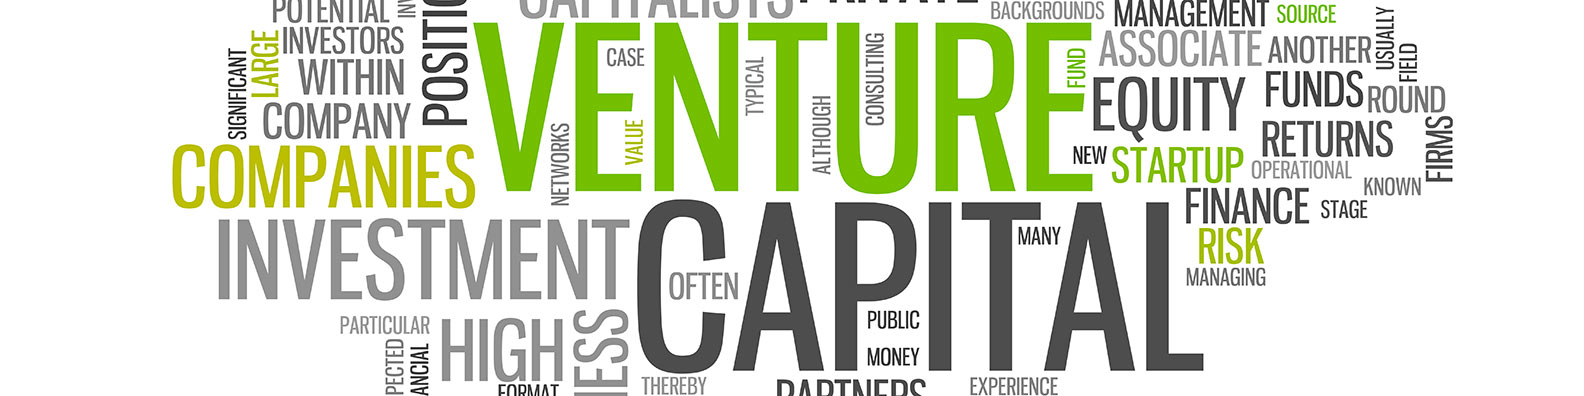 Venture Capital LinkedIn Background Image